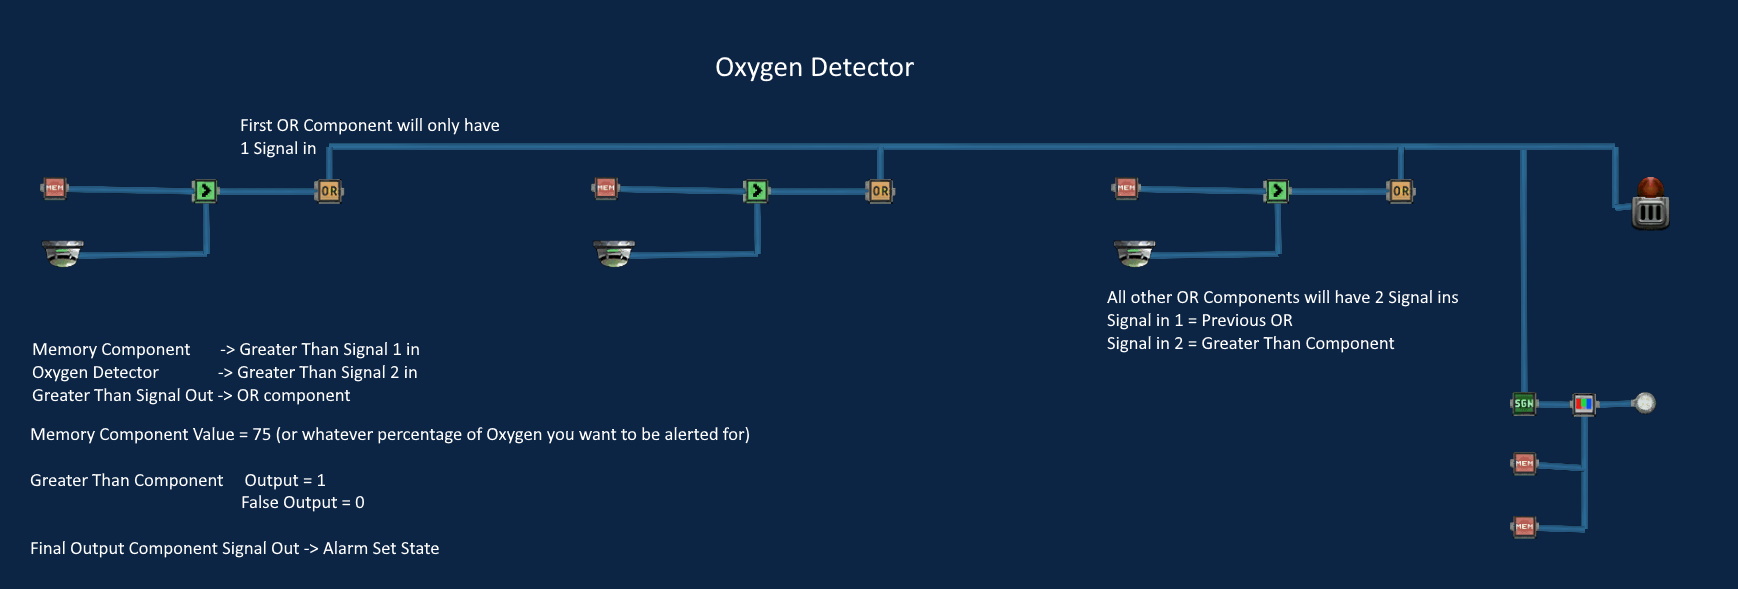 Barotrauma Quick reference Smoke Detector & Oxygen Detectors - Oxygen Detector